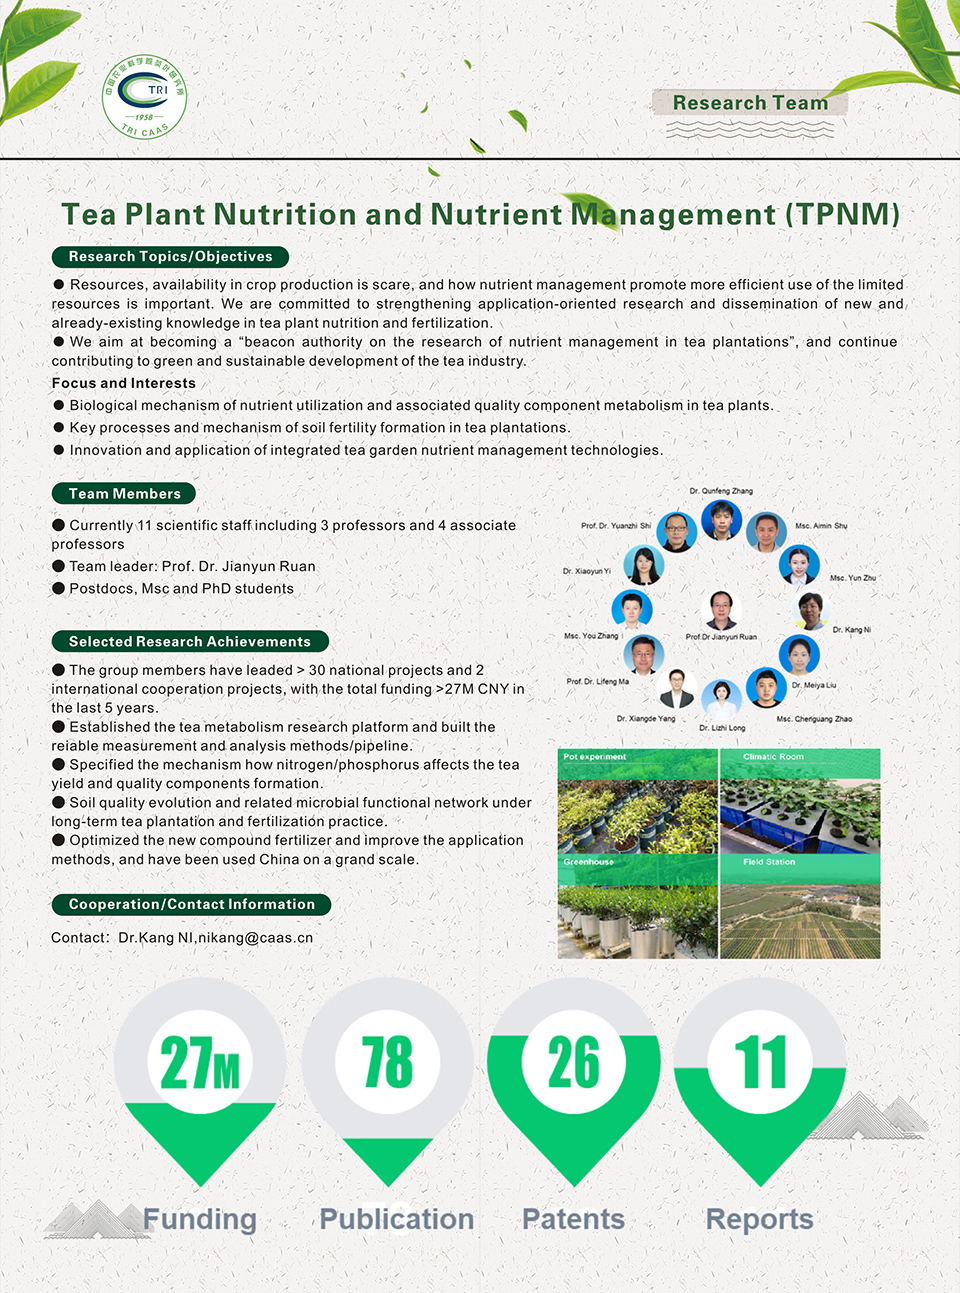 4-Tea Plant Nutrition and Nutrient Management.jpg